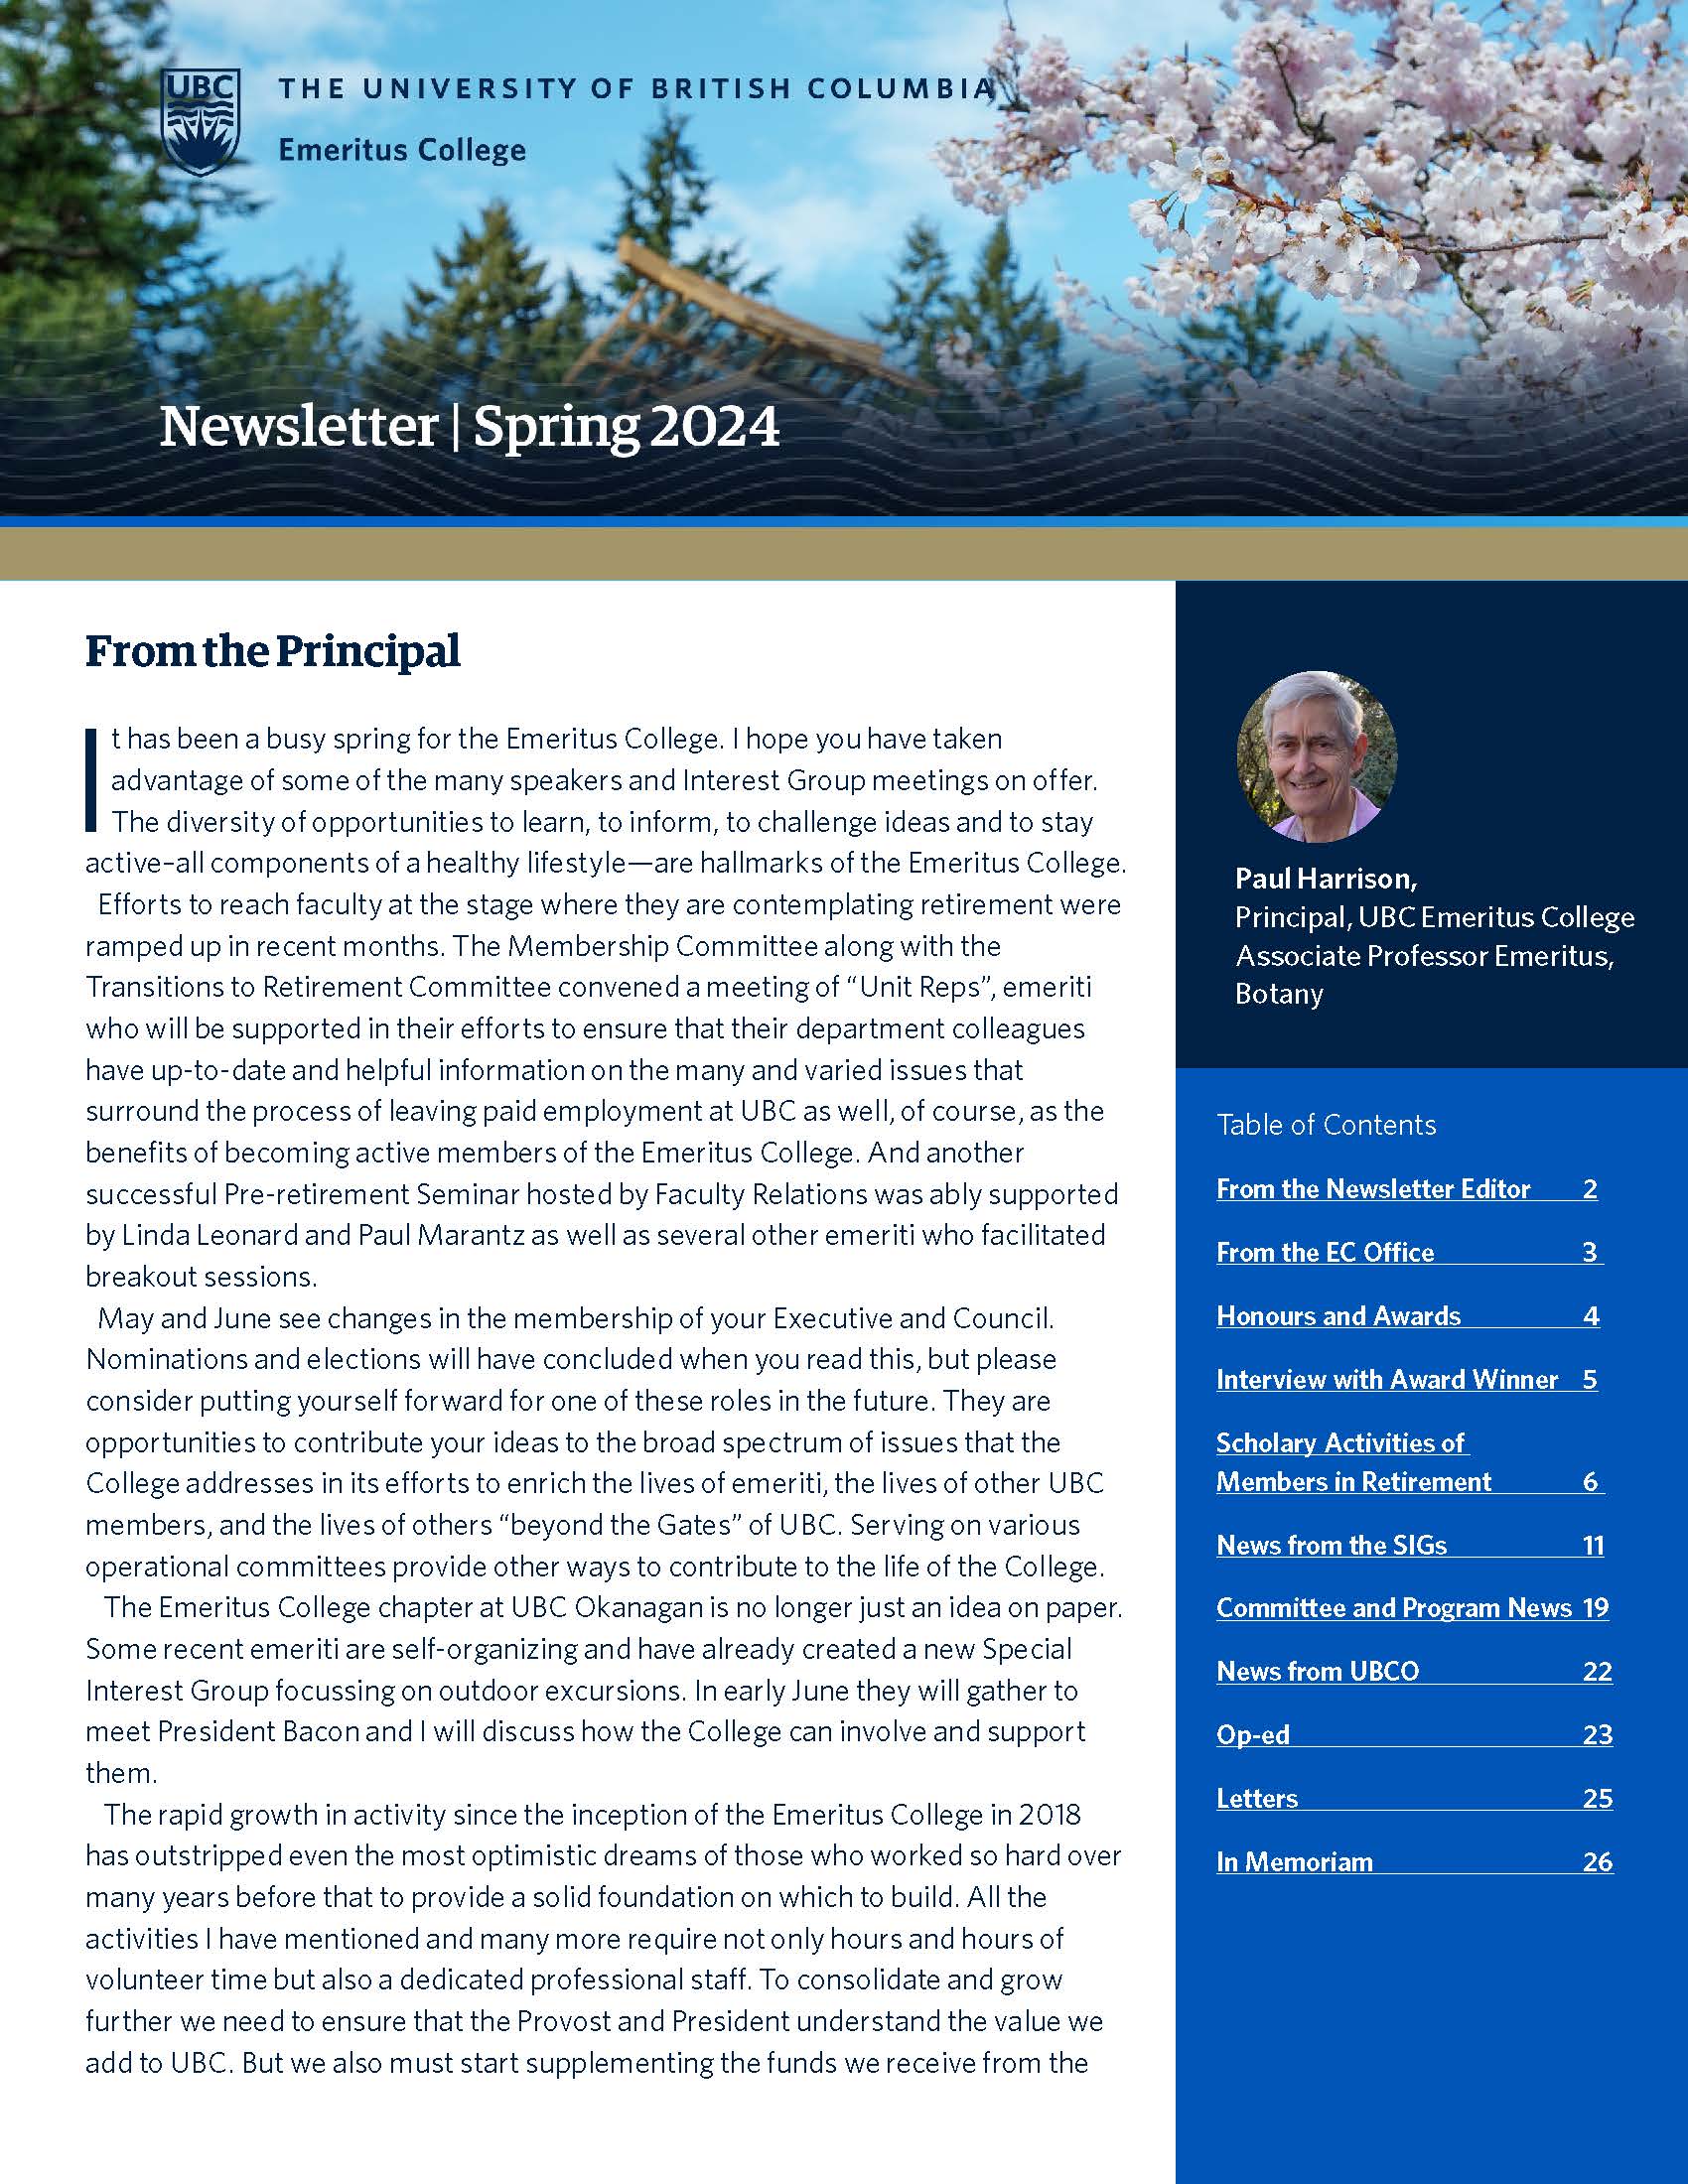 Emeritus College Spring 2024 Newsletter cover